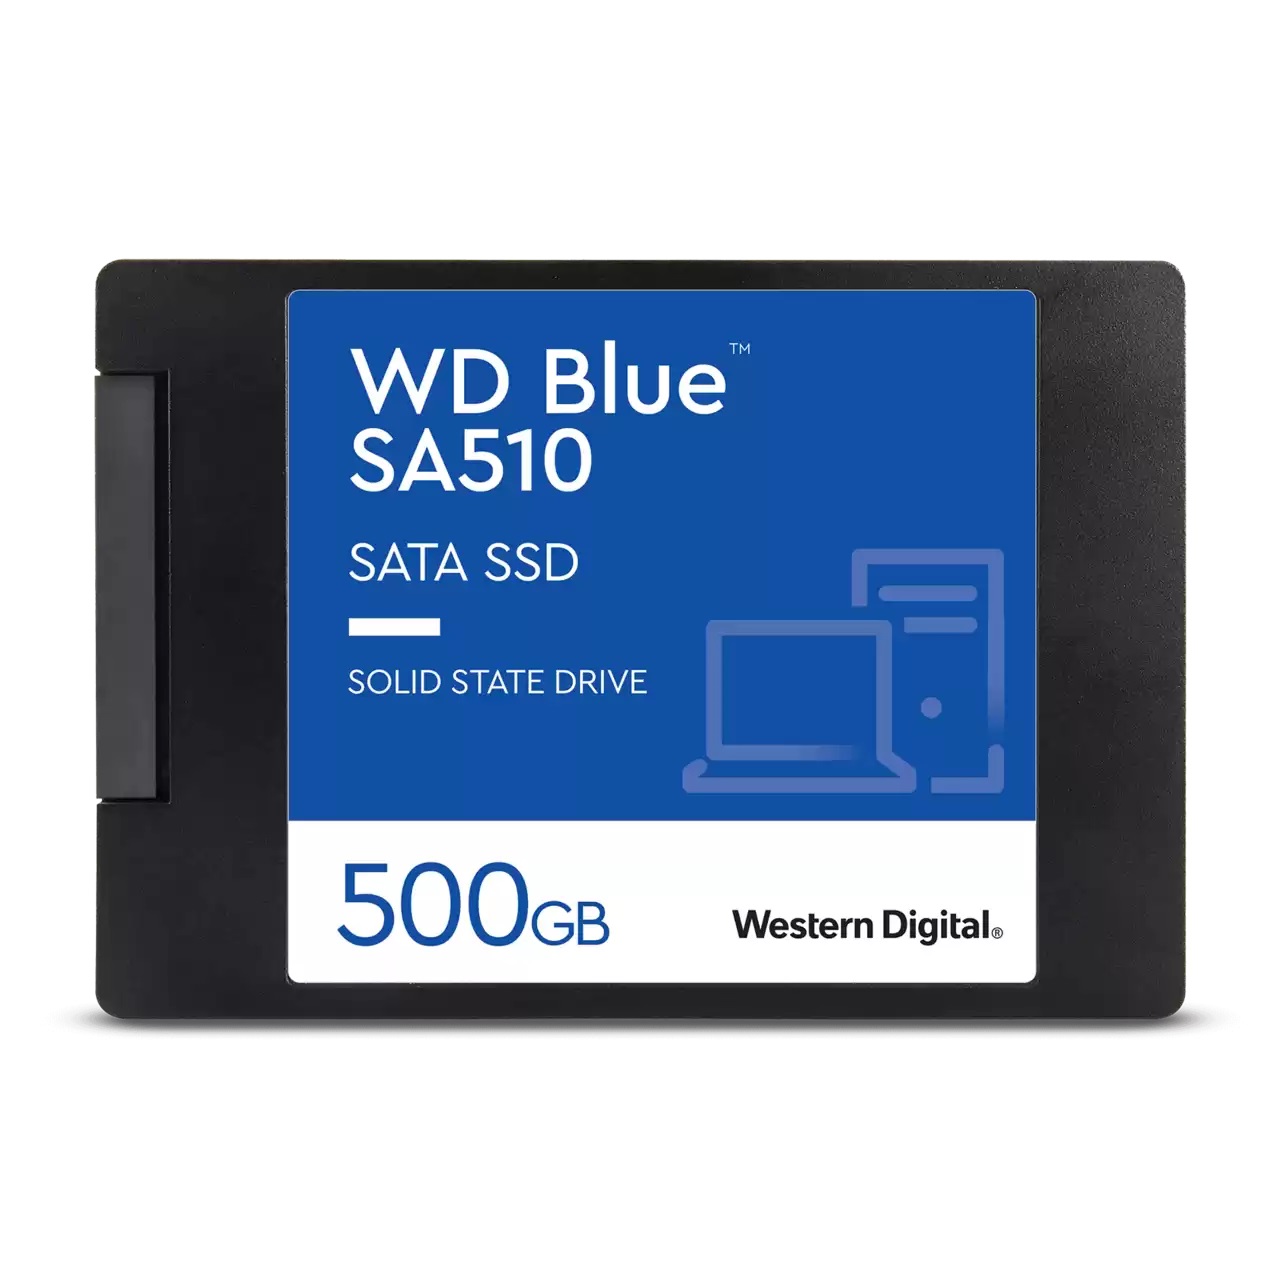 WD Blue SA510/500GB/SSD/2.5